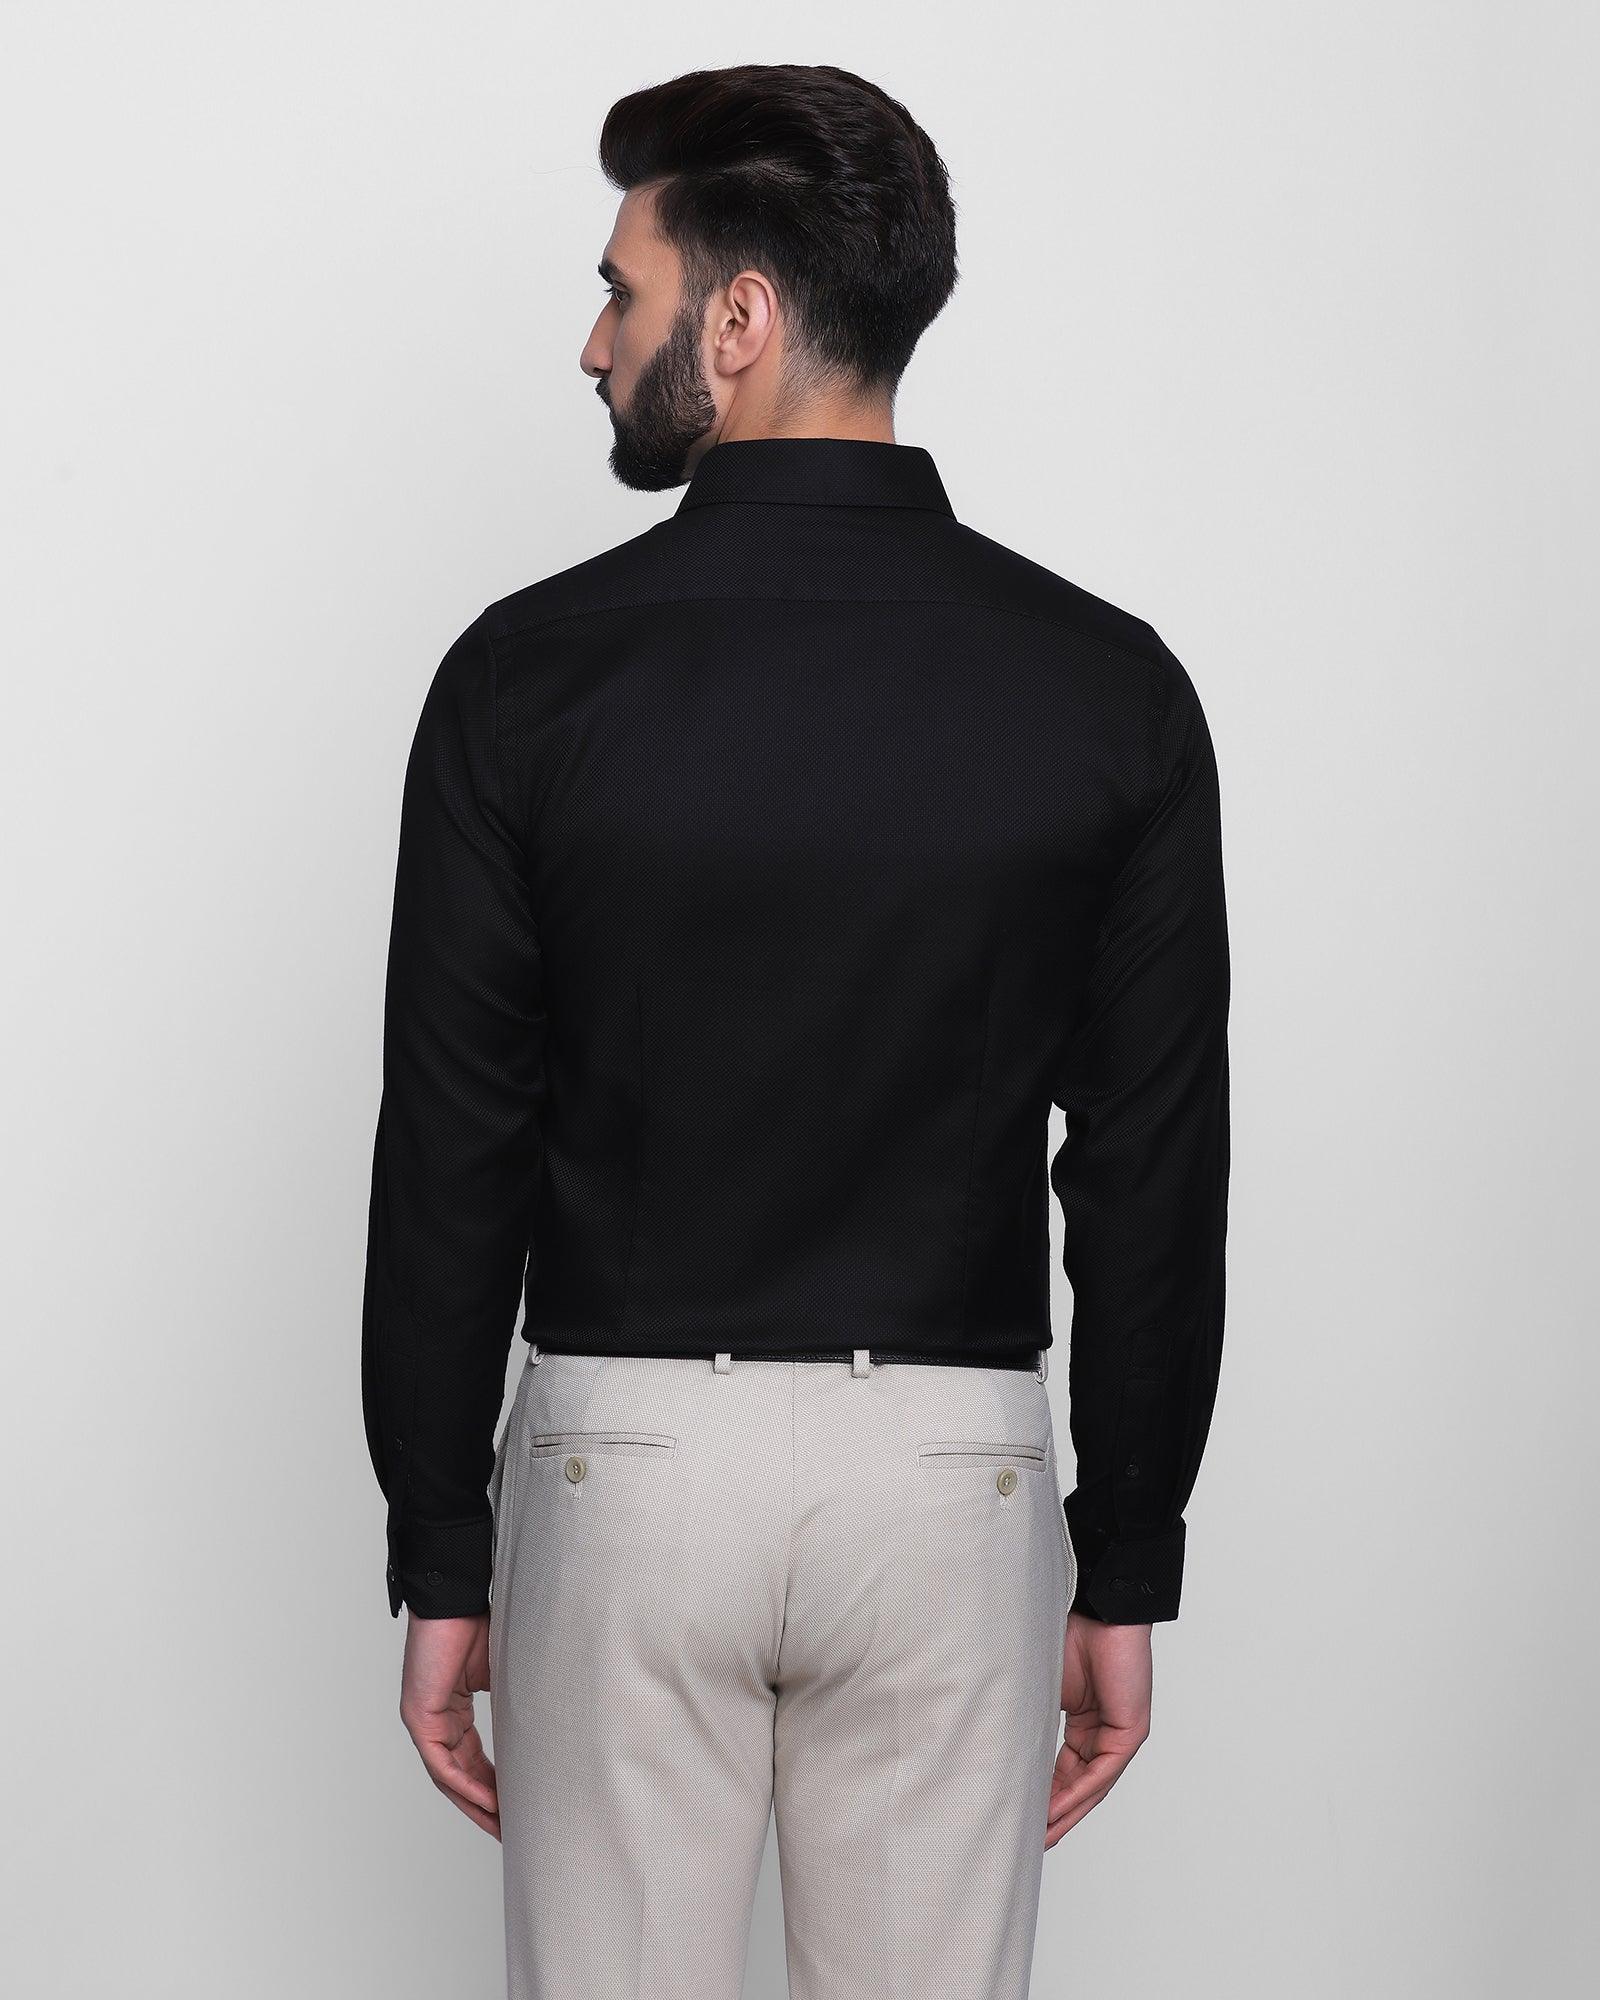 Formal Black Textured Shirt - Fortis